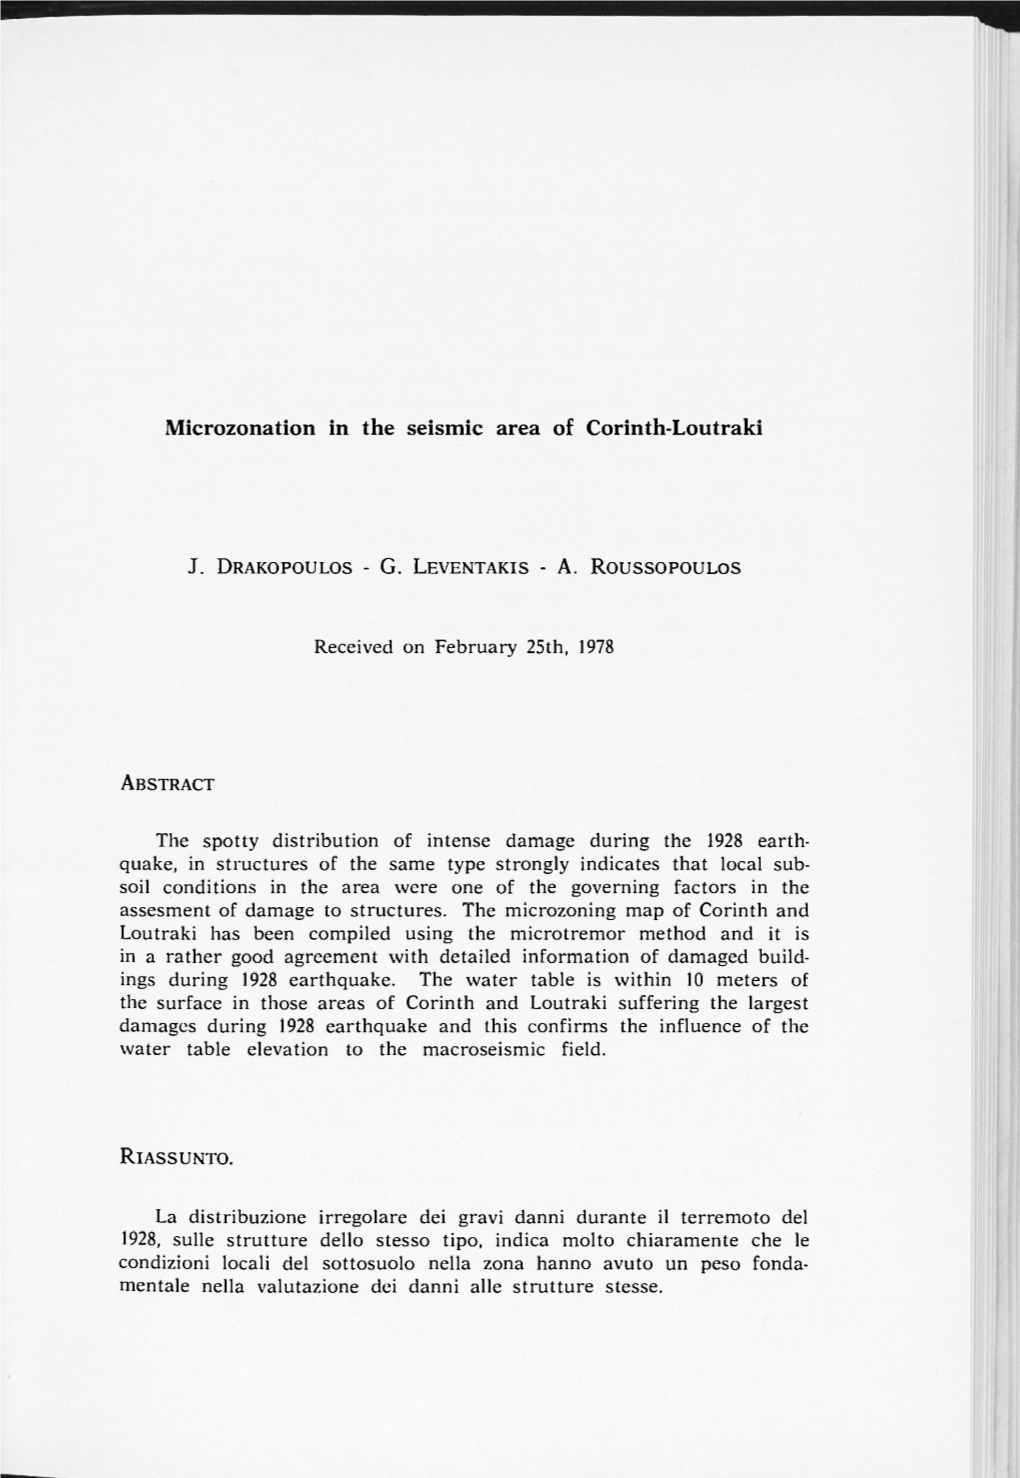 Microzonation in the Seismic Area of Corinth-Loutraki